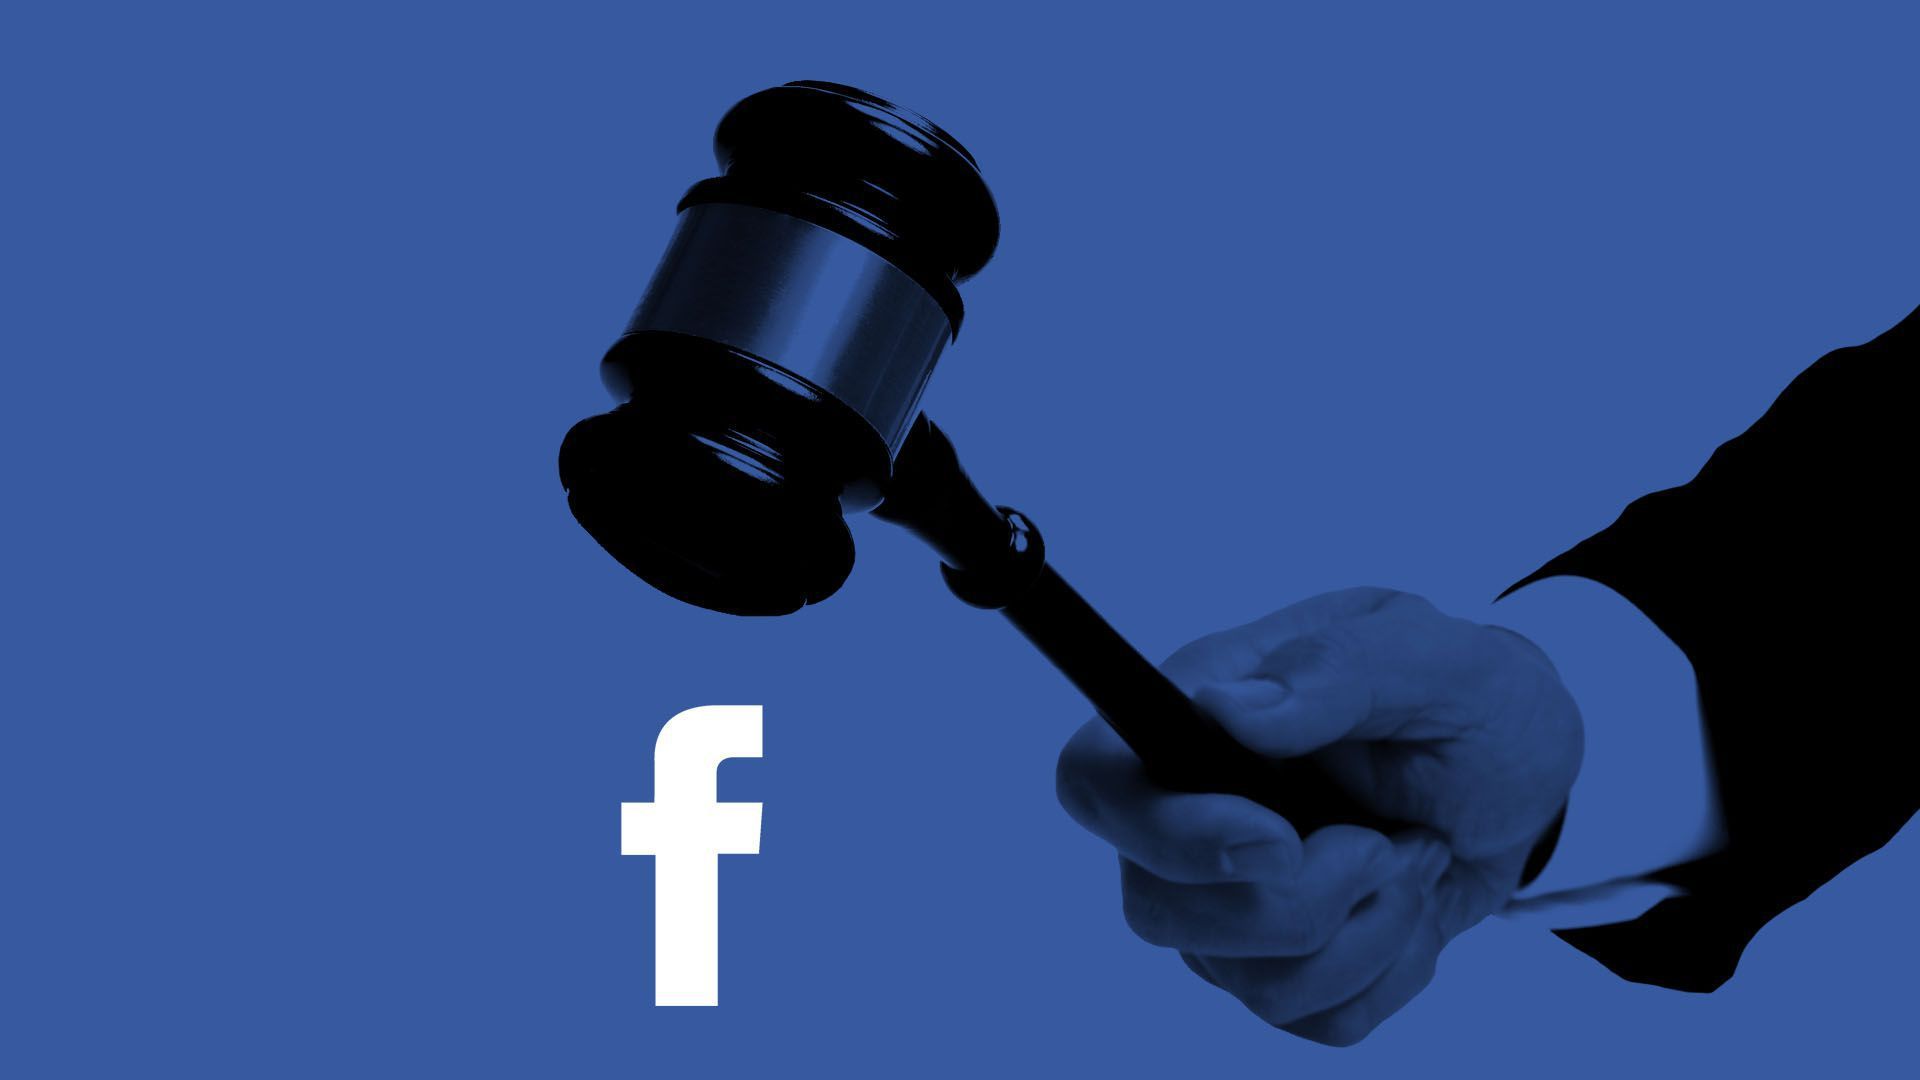 Illustration of a gavel bearing down on Facebook's "f" logo